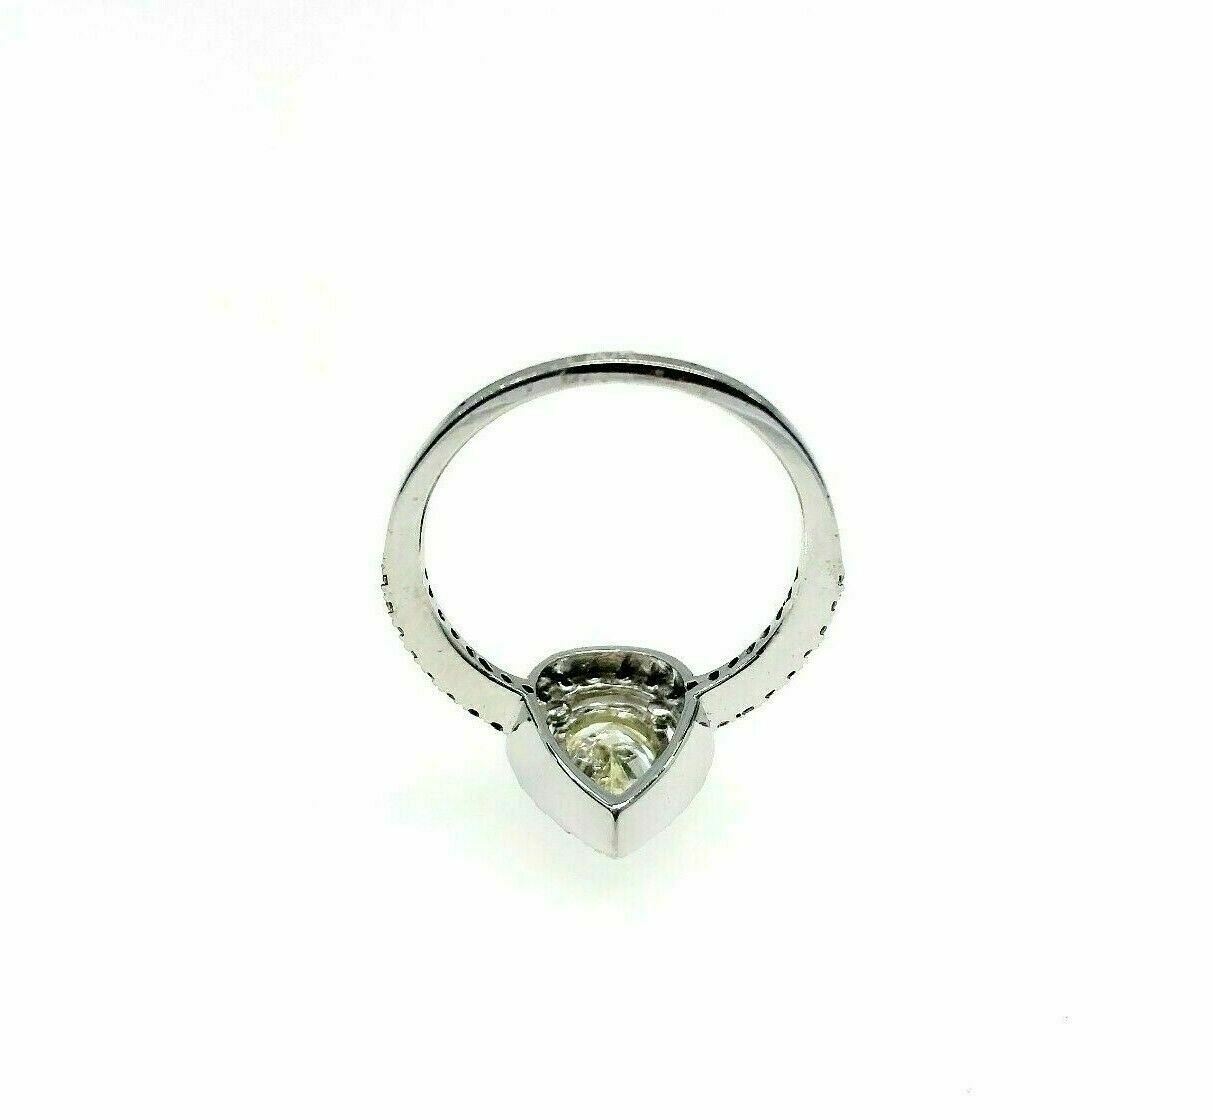 1.18 Carats t.w. Pear Halo Diamond Engagement Ring 0.83 Diamond Center 14K Gold